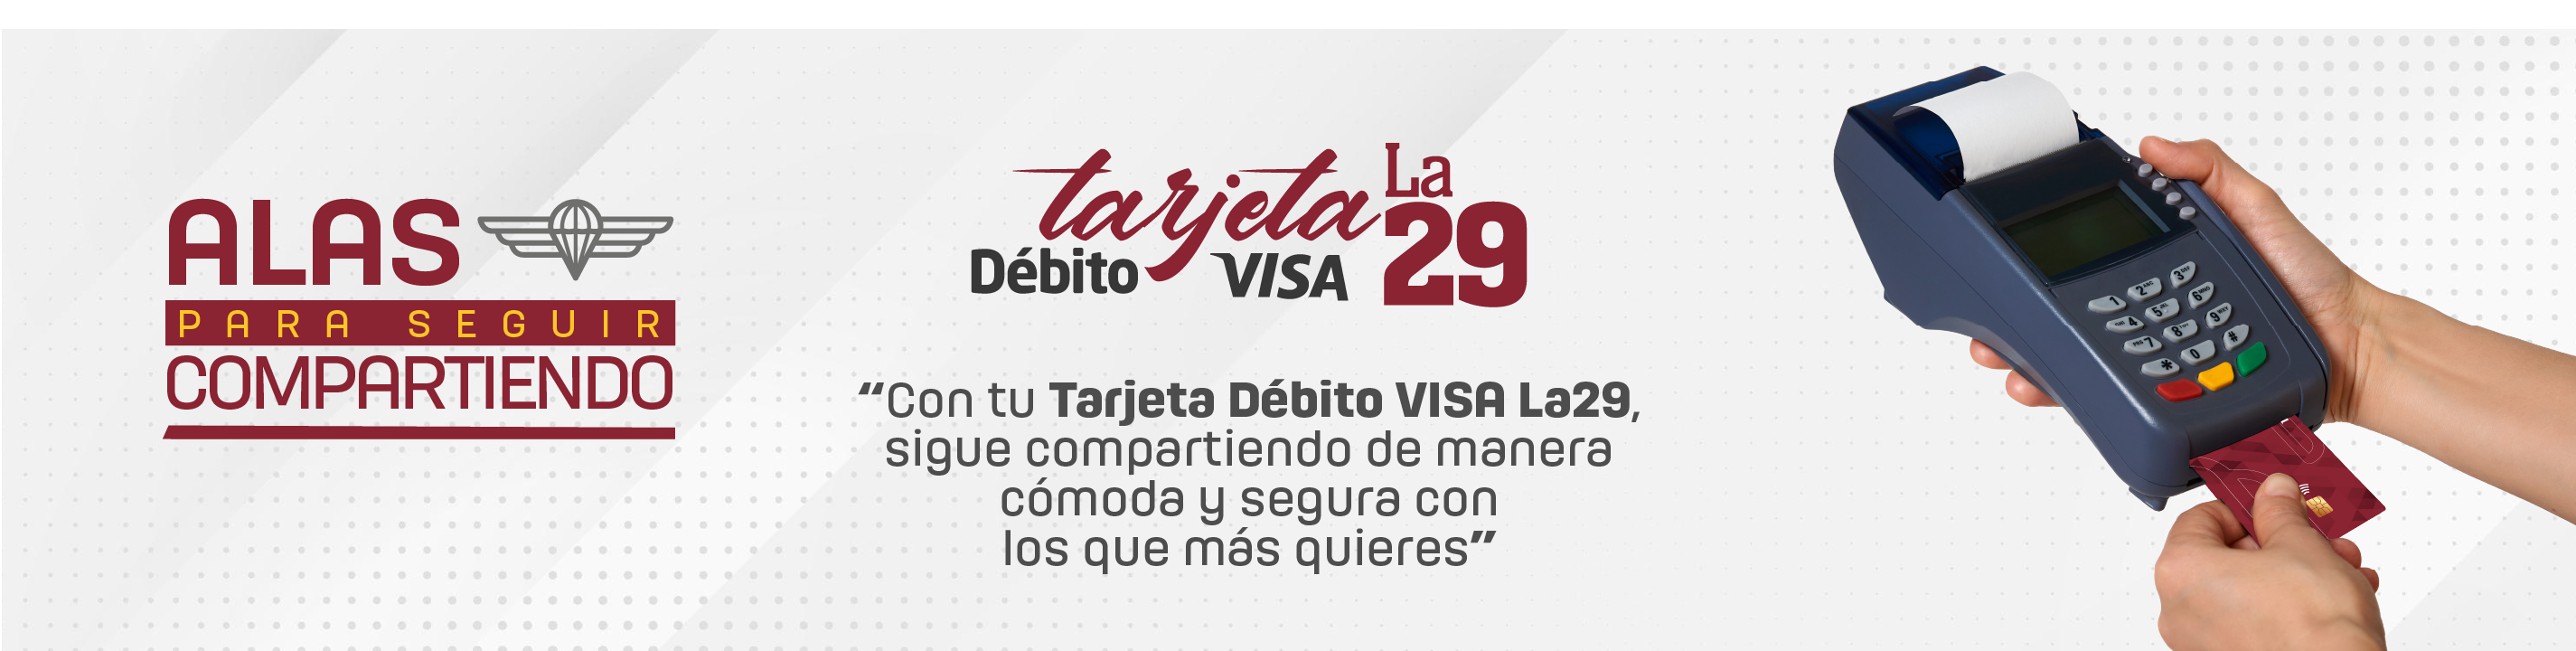 Imagen Tarjeta Visa